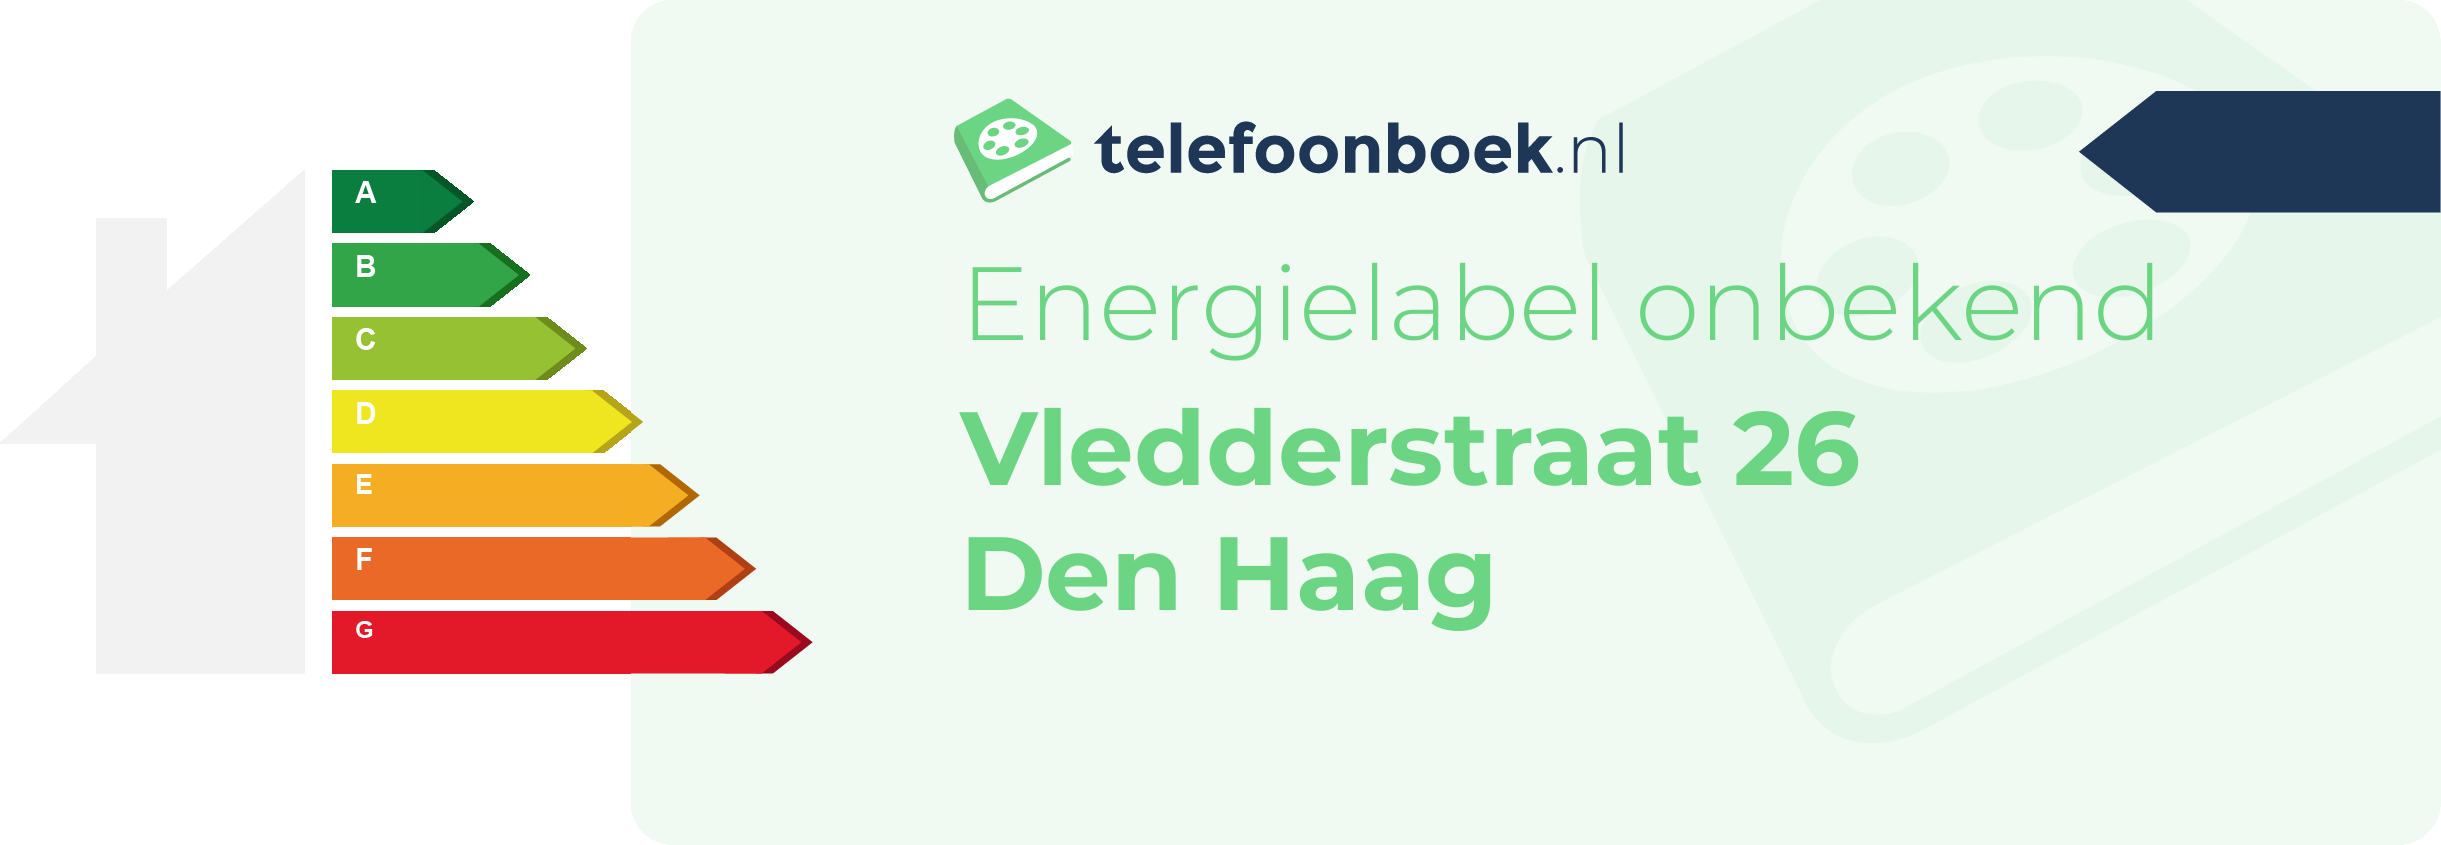 Energielabel Vledderstraat 26 Den Haag